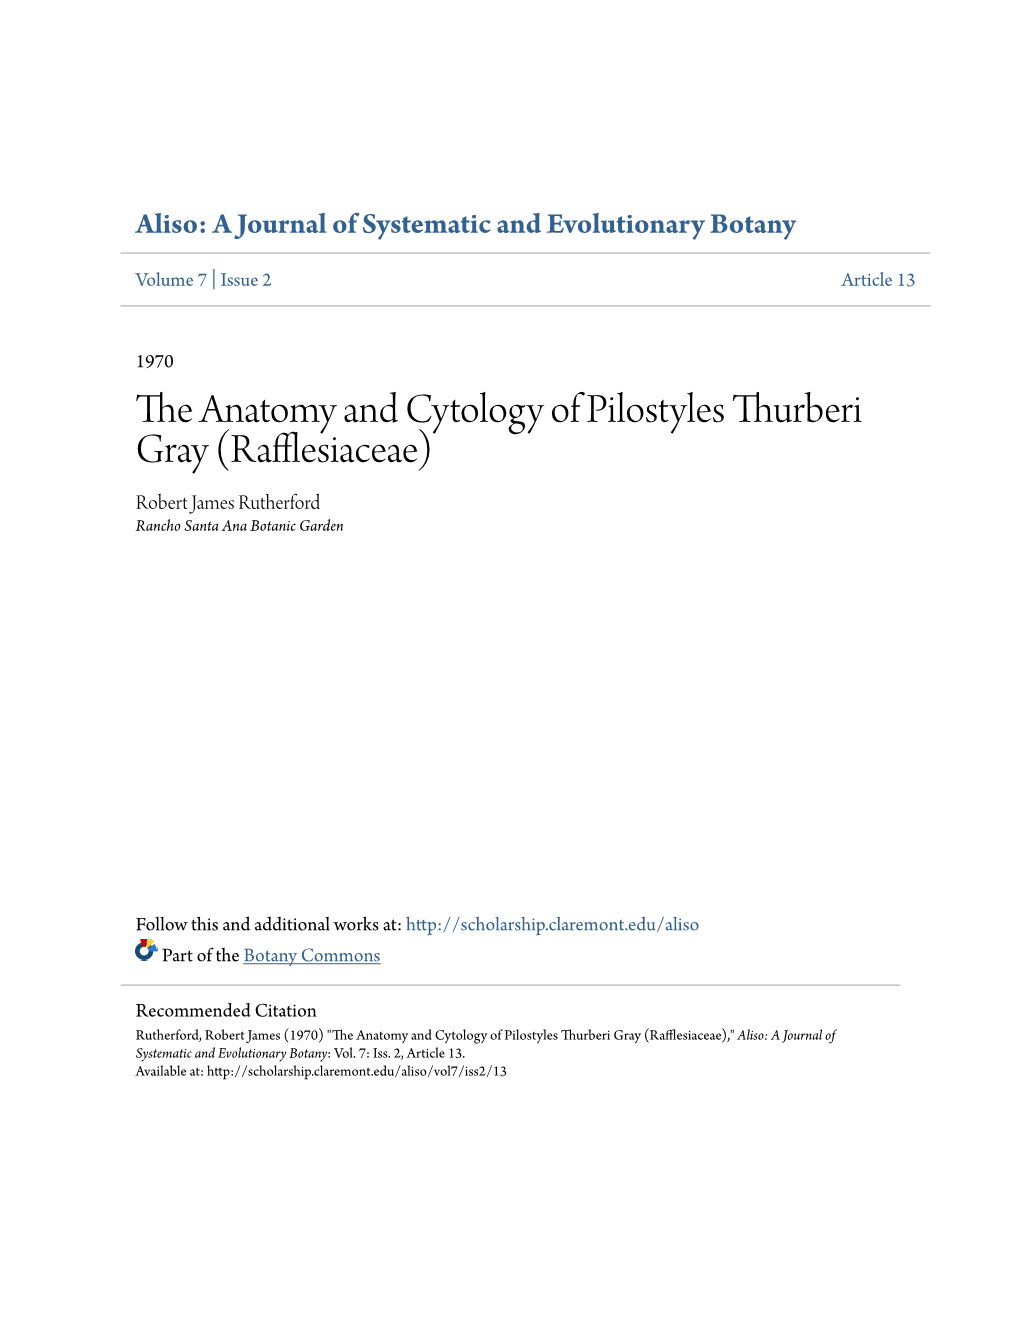 The Anatomy and Cytology of Pilostyles Thurberi Gray (Rafflesiaceae) Robert James Rutherford Rancho Santa Ana Botanic Garden